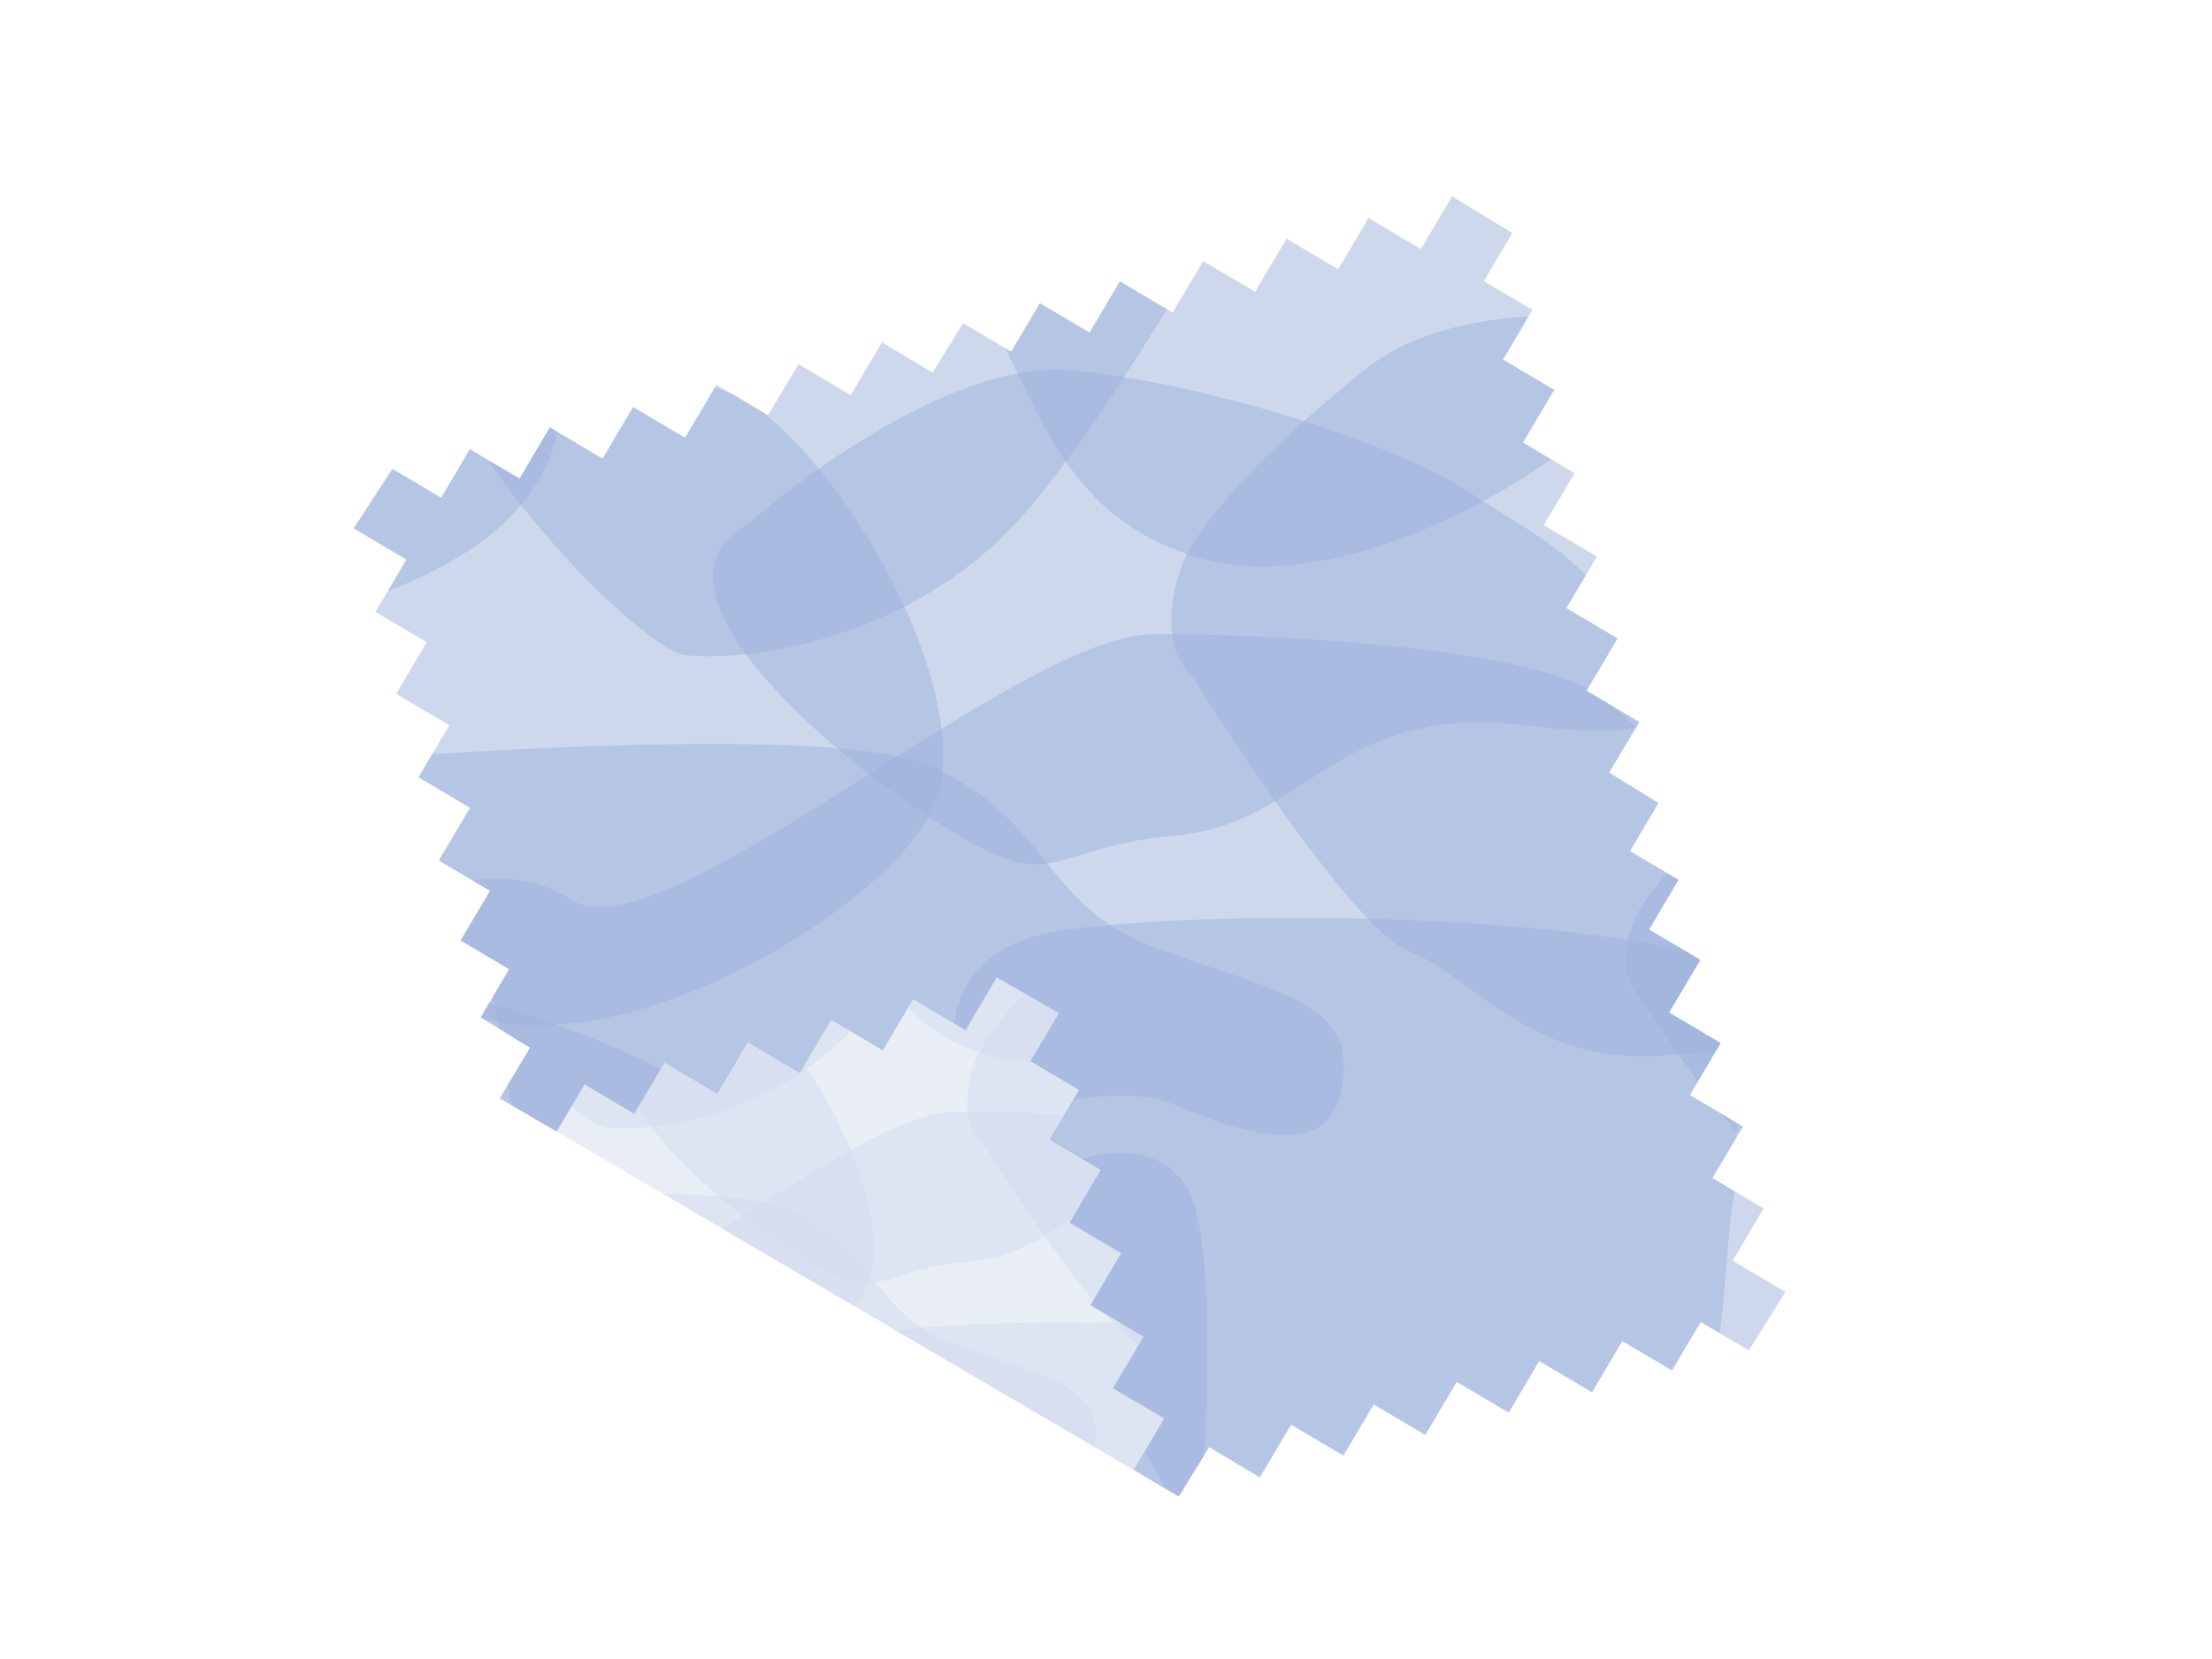 Blue napkin illustration